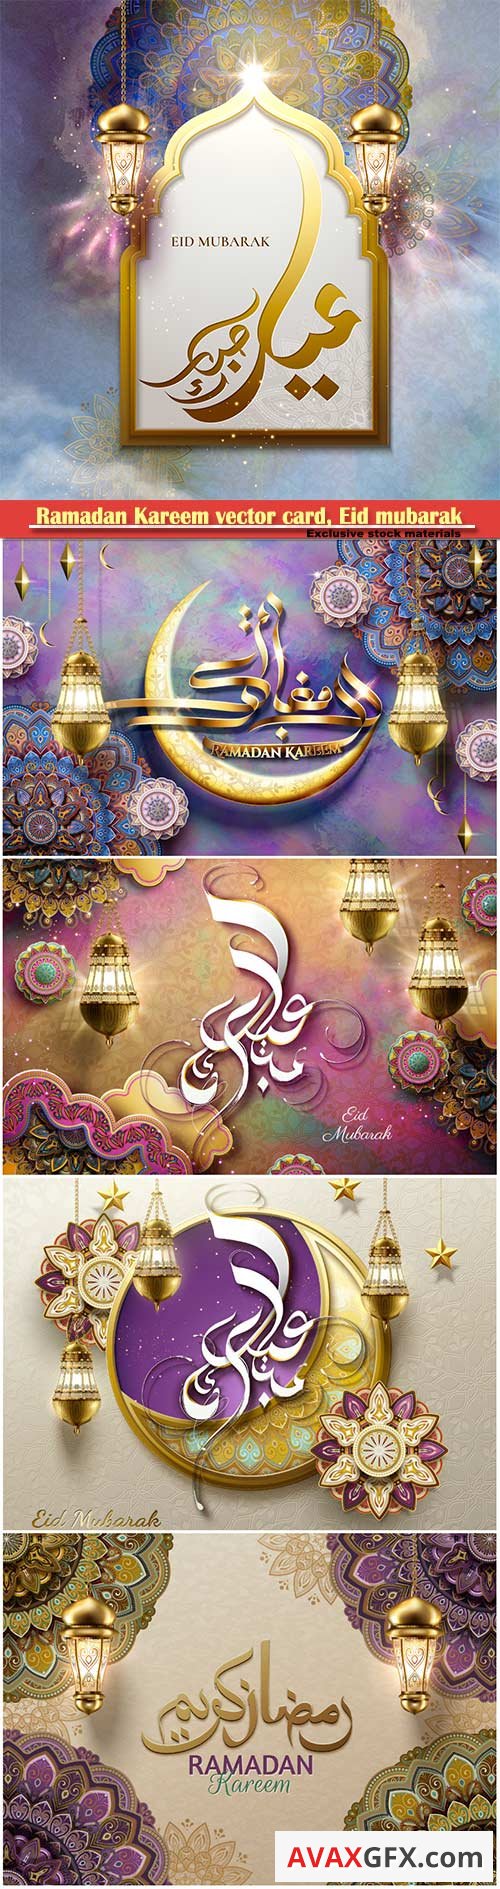 Eid mubarak calligraphy design, Ramadan Kareem vector card templates